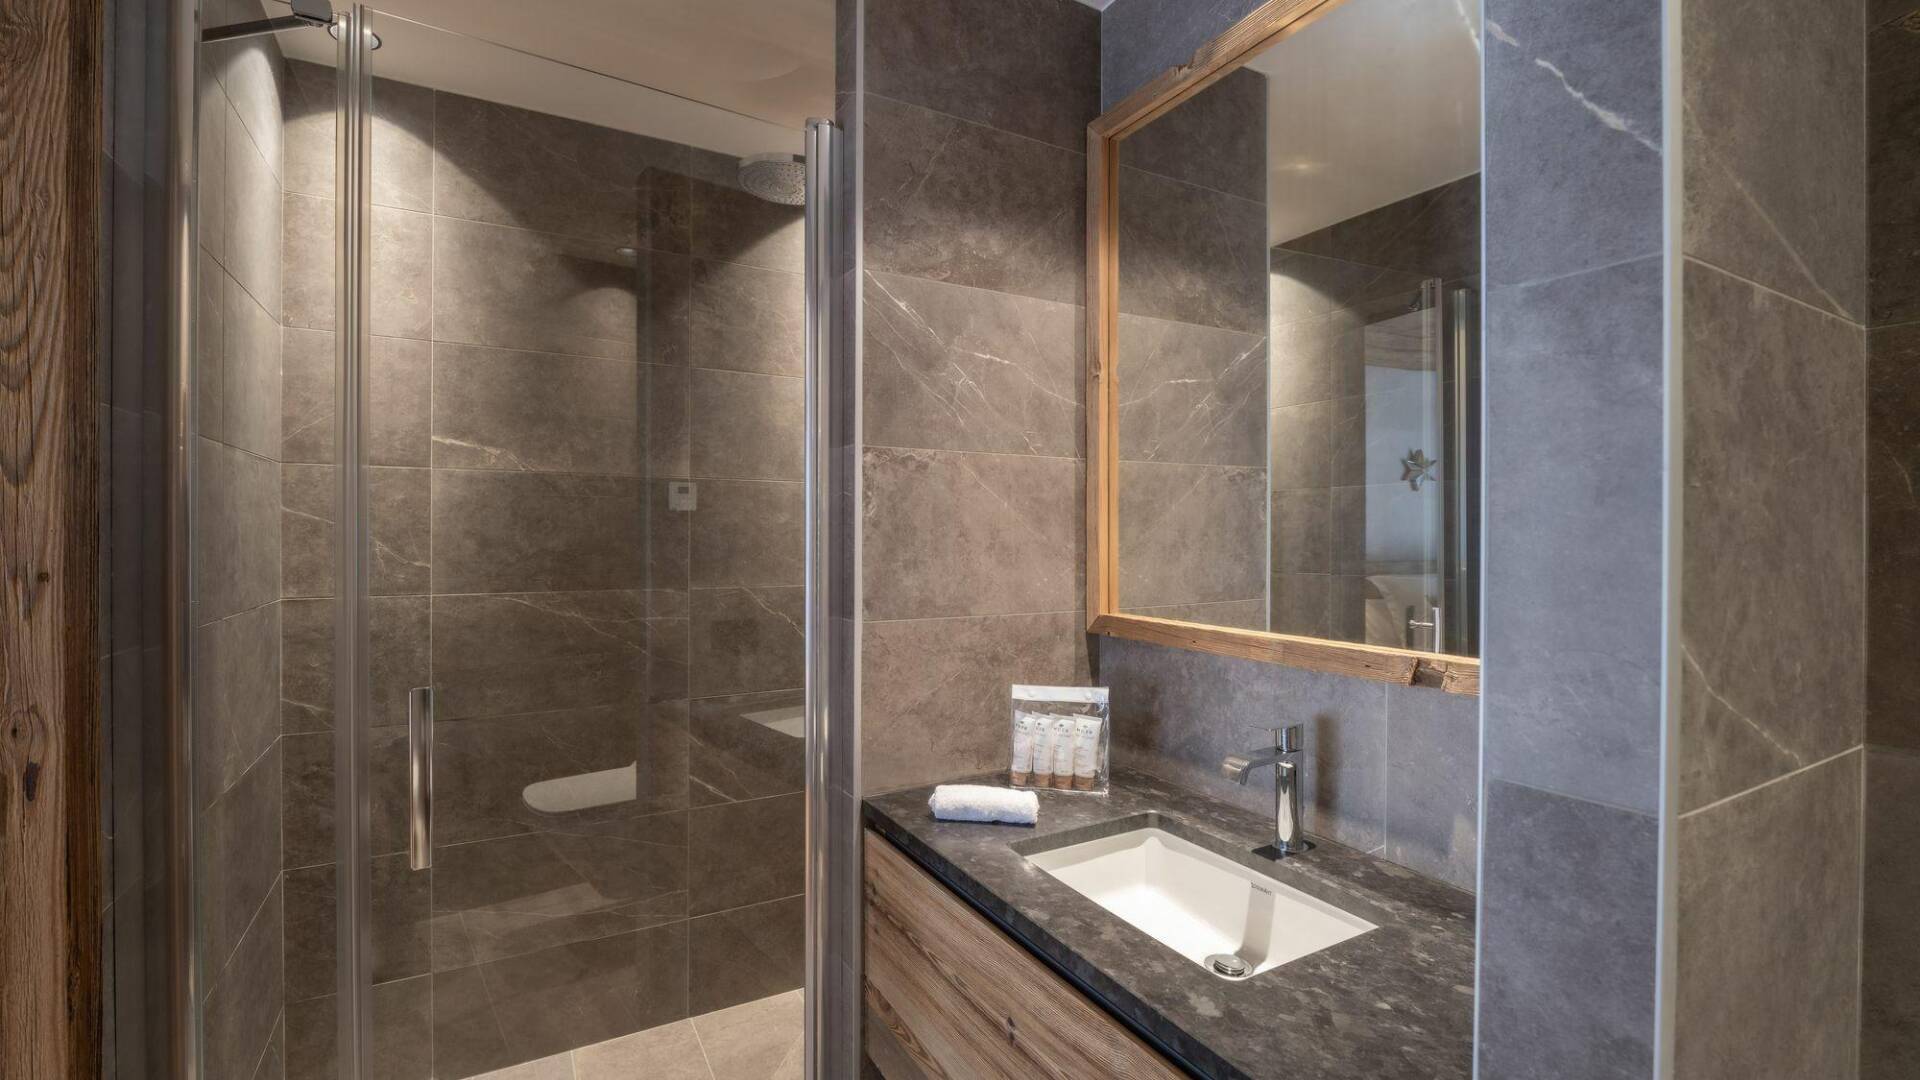 en suite bathroom with large walk-in shower